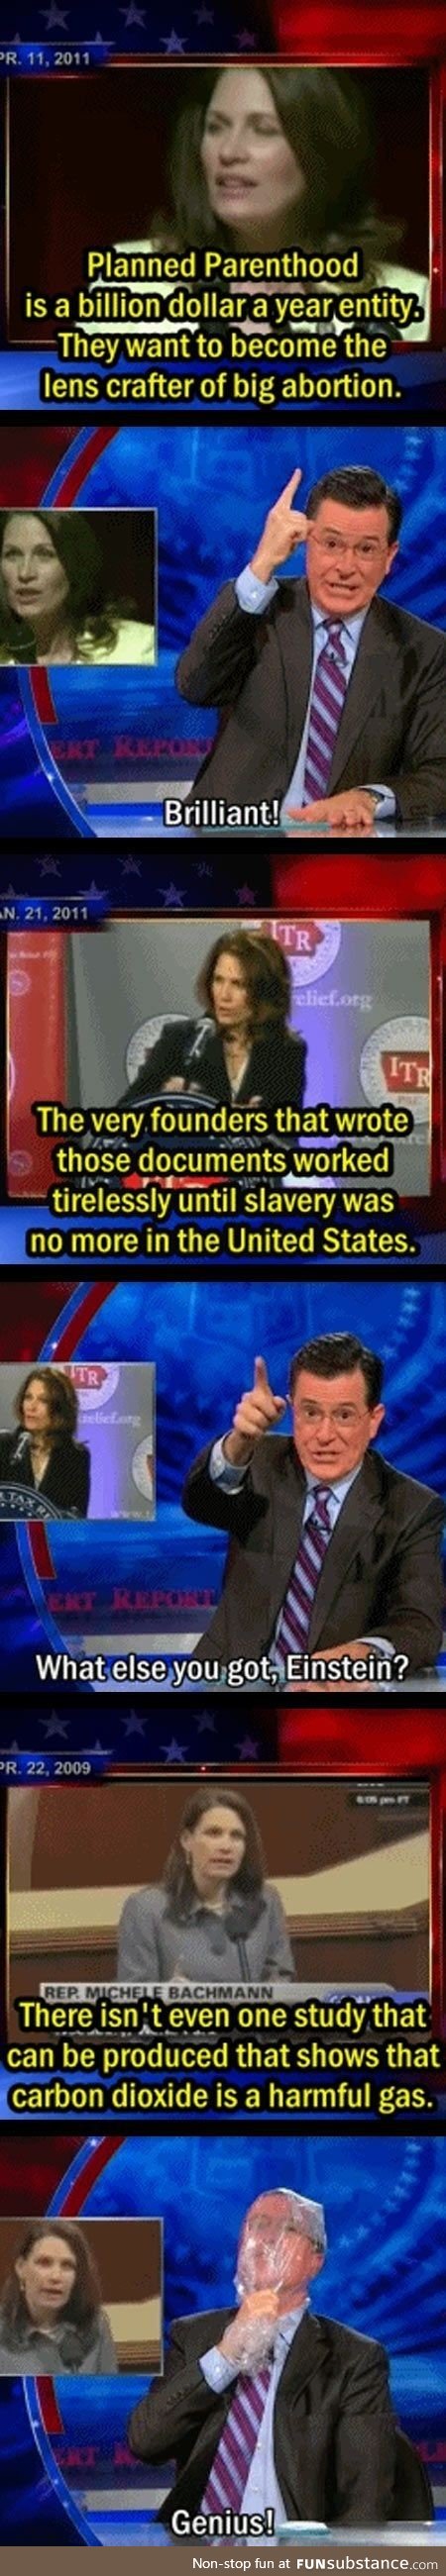 I miss the Colbert Report